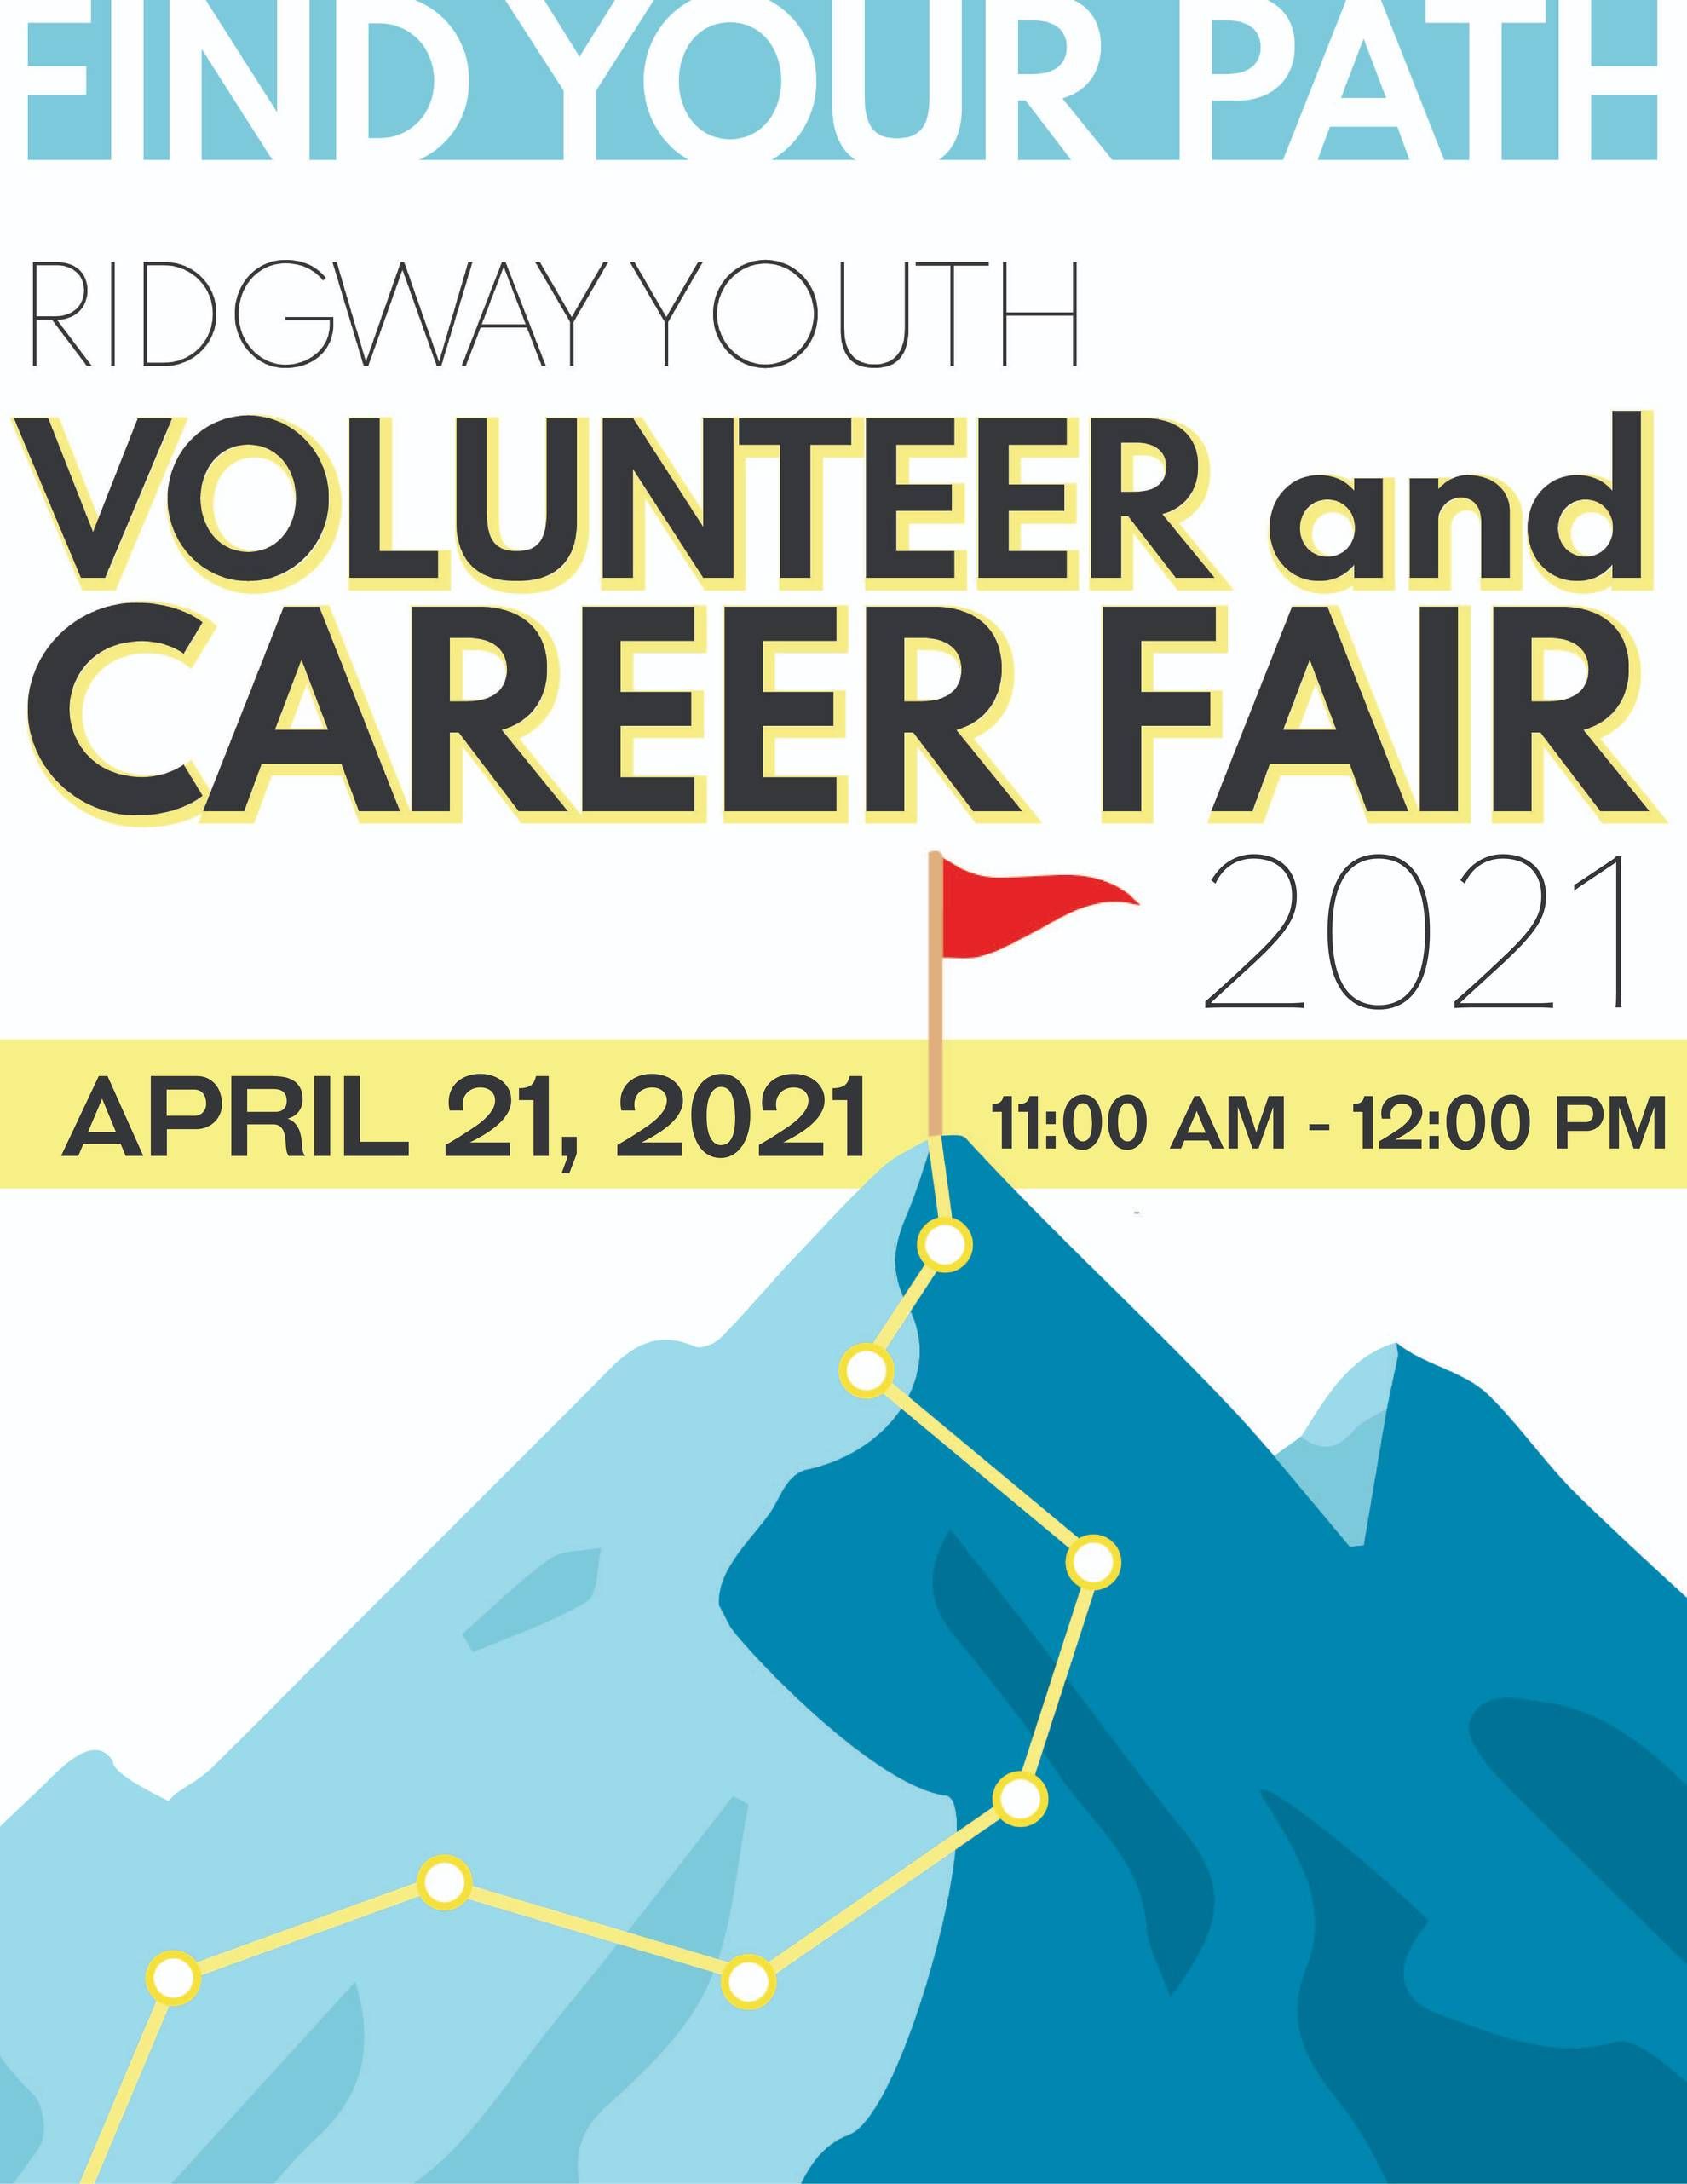 Ridgway Youth Volunteer and Career Fair poster